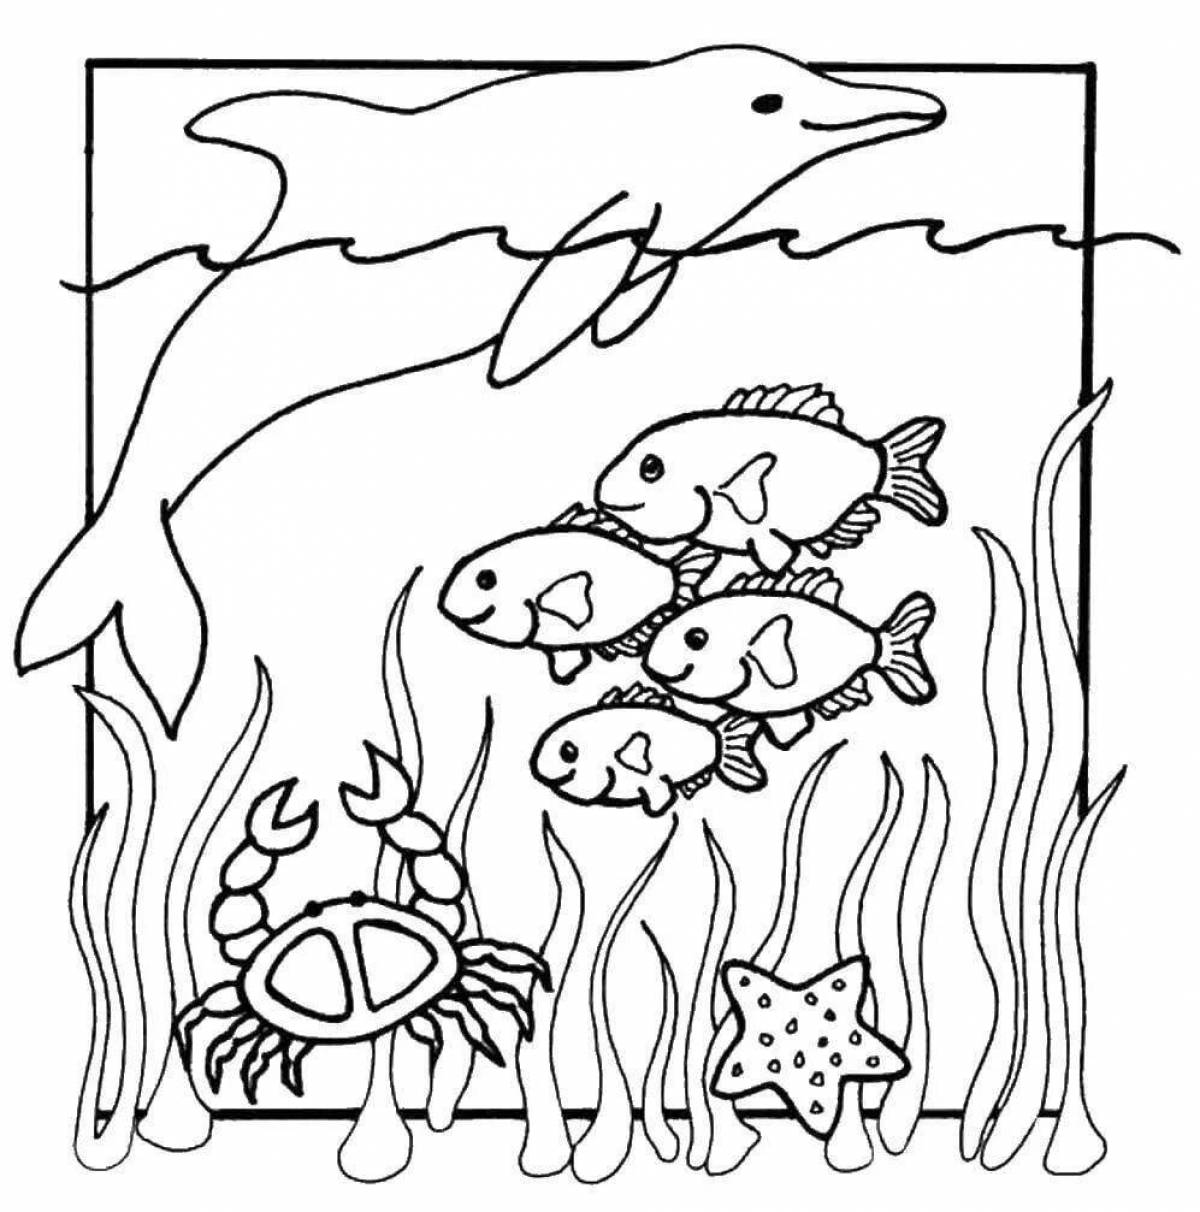 Serene underwater kingdom coloring page